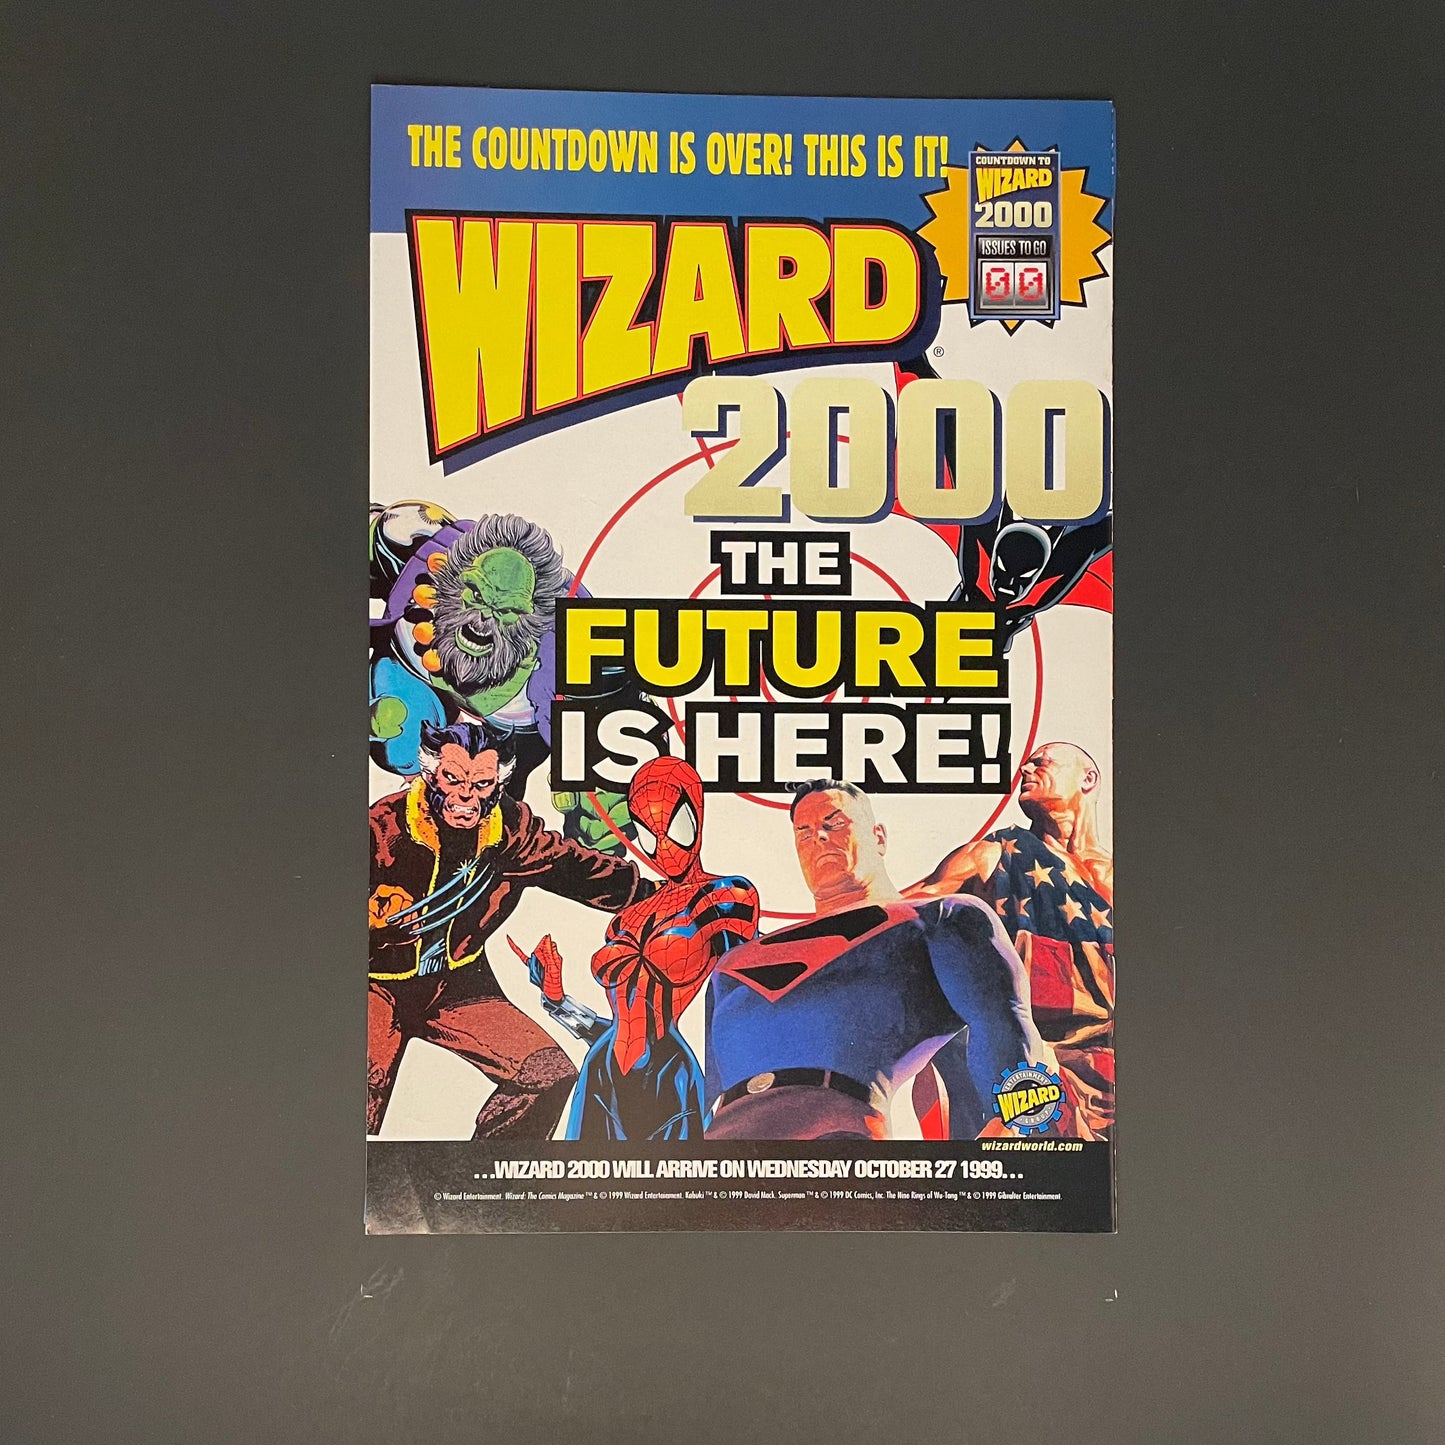 Captain Marvel Vol.3: #0: Wizard